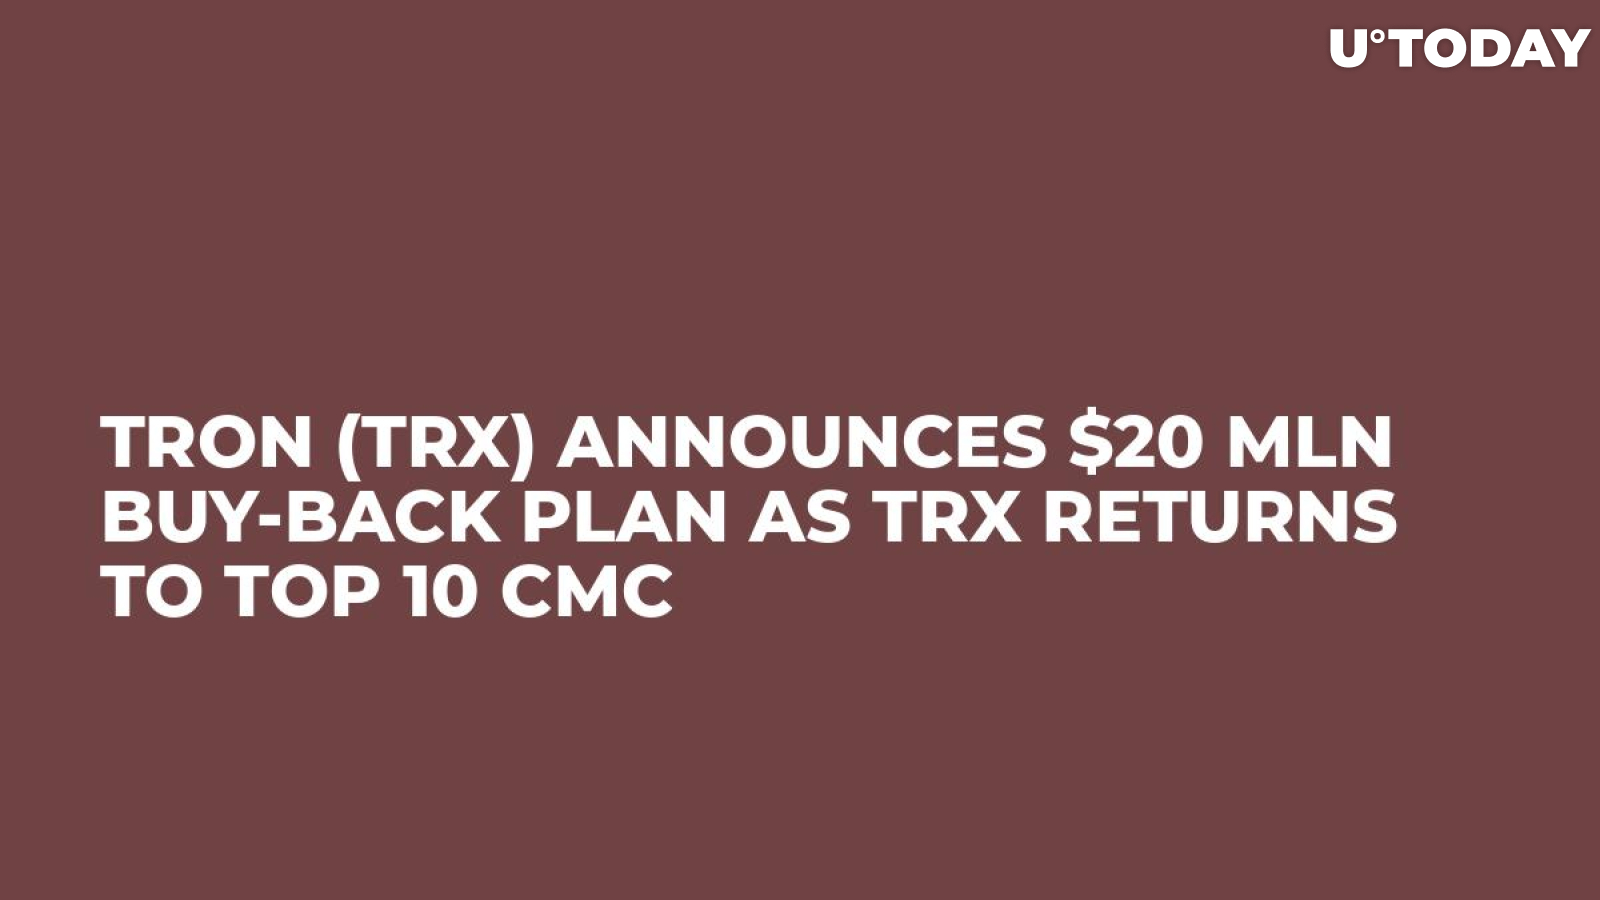 Tron (TRX) Announces $20 Mln Buy-Back Plan as TRX Returns to Top 10 CMC